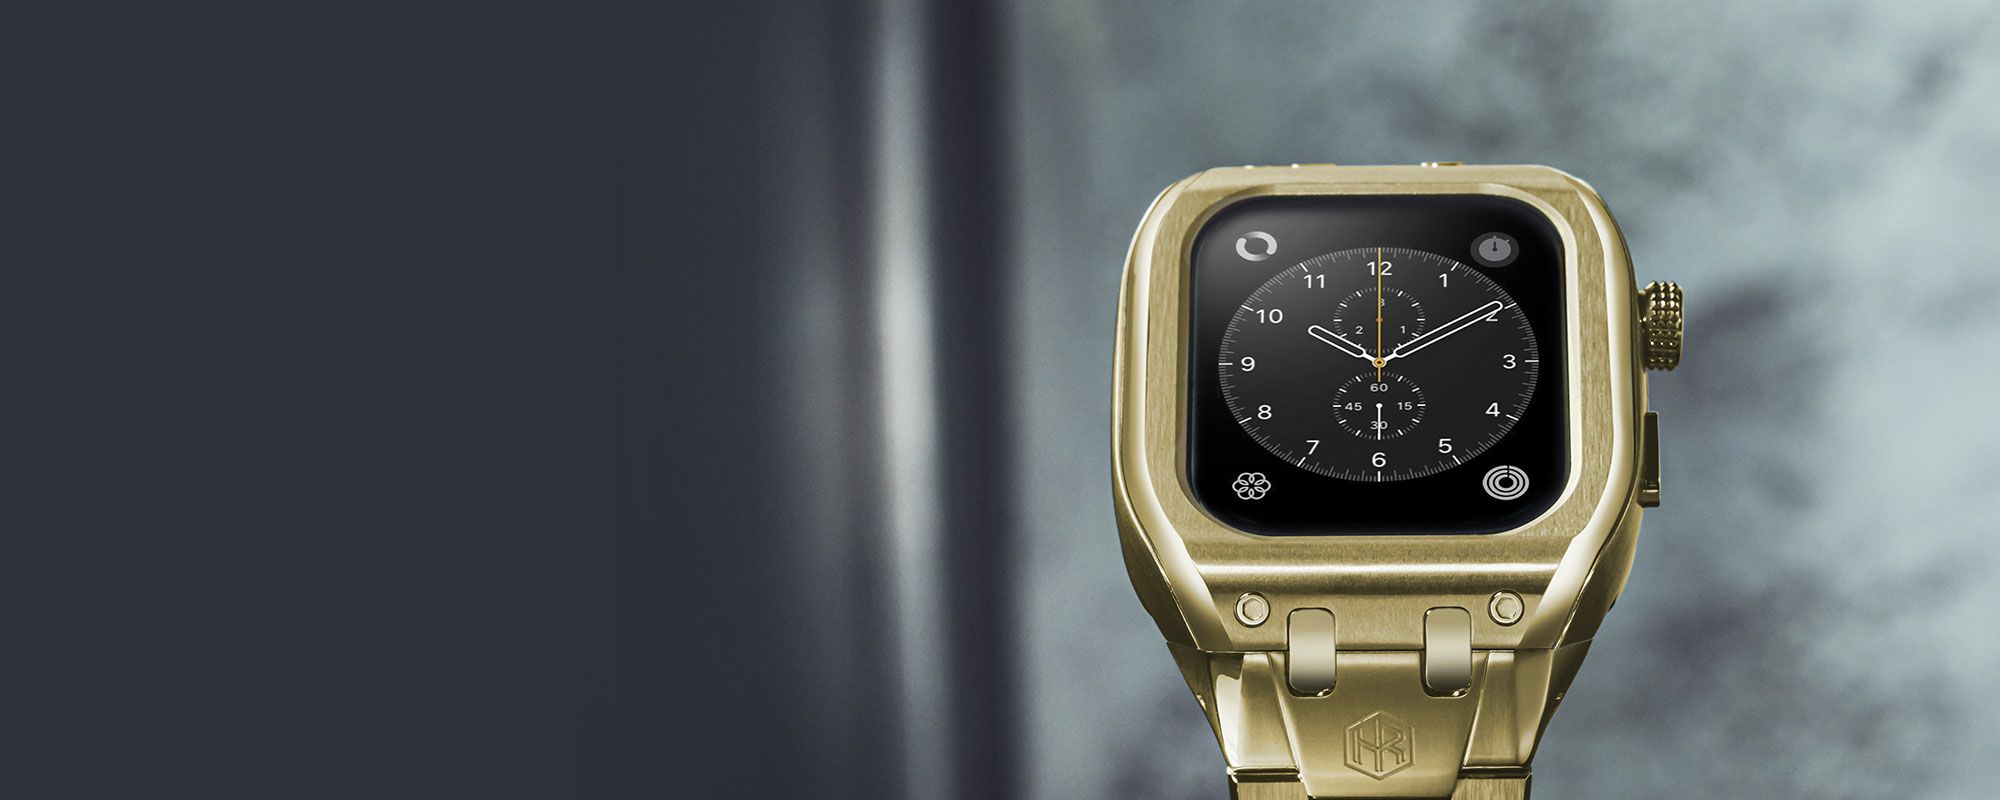 Apple Watch ケース - CLASSIC METAL WBB0290-030 45mm | 高級アップル 